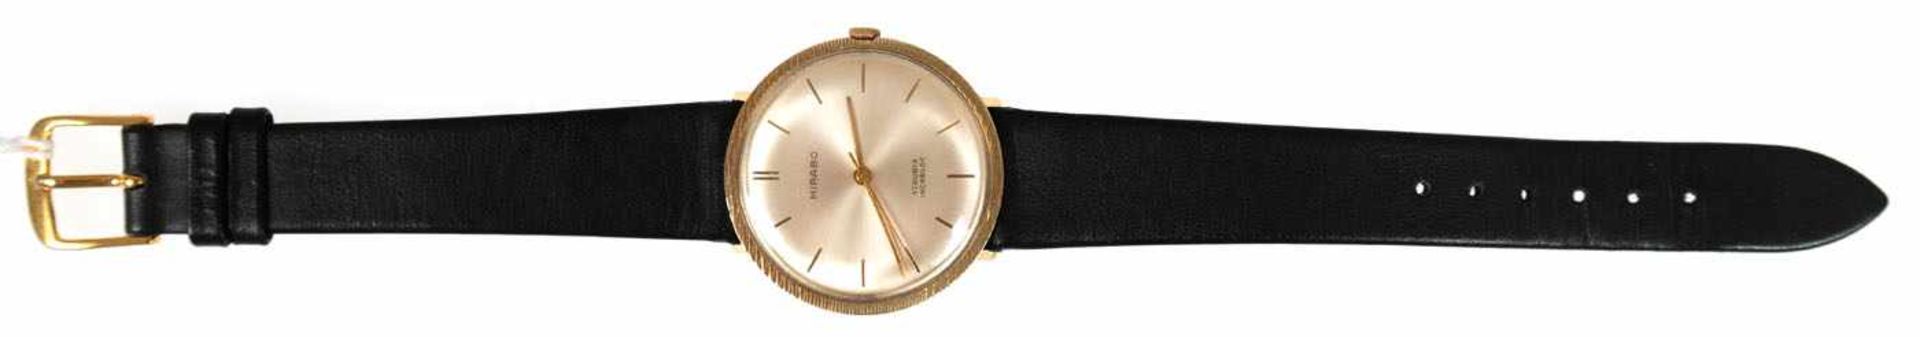 Herren-Armbanduhr "Mirabo", 585er Goldgehäuse, Handaufzug, Zentralsekunde, funktionstüchtig, Dm. 3, - Bild 2 aus 2